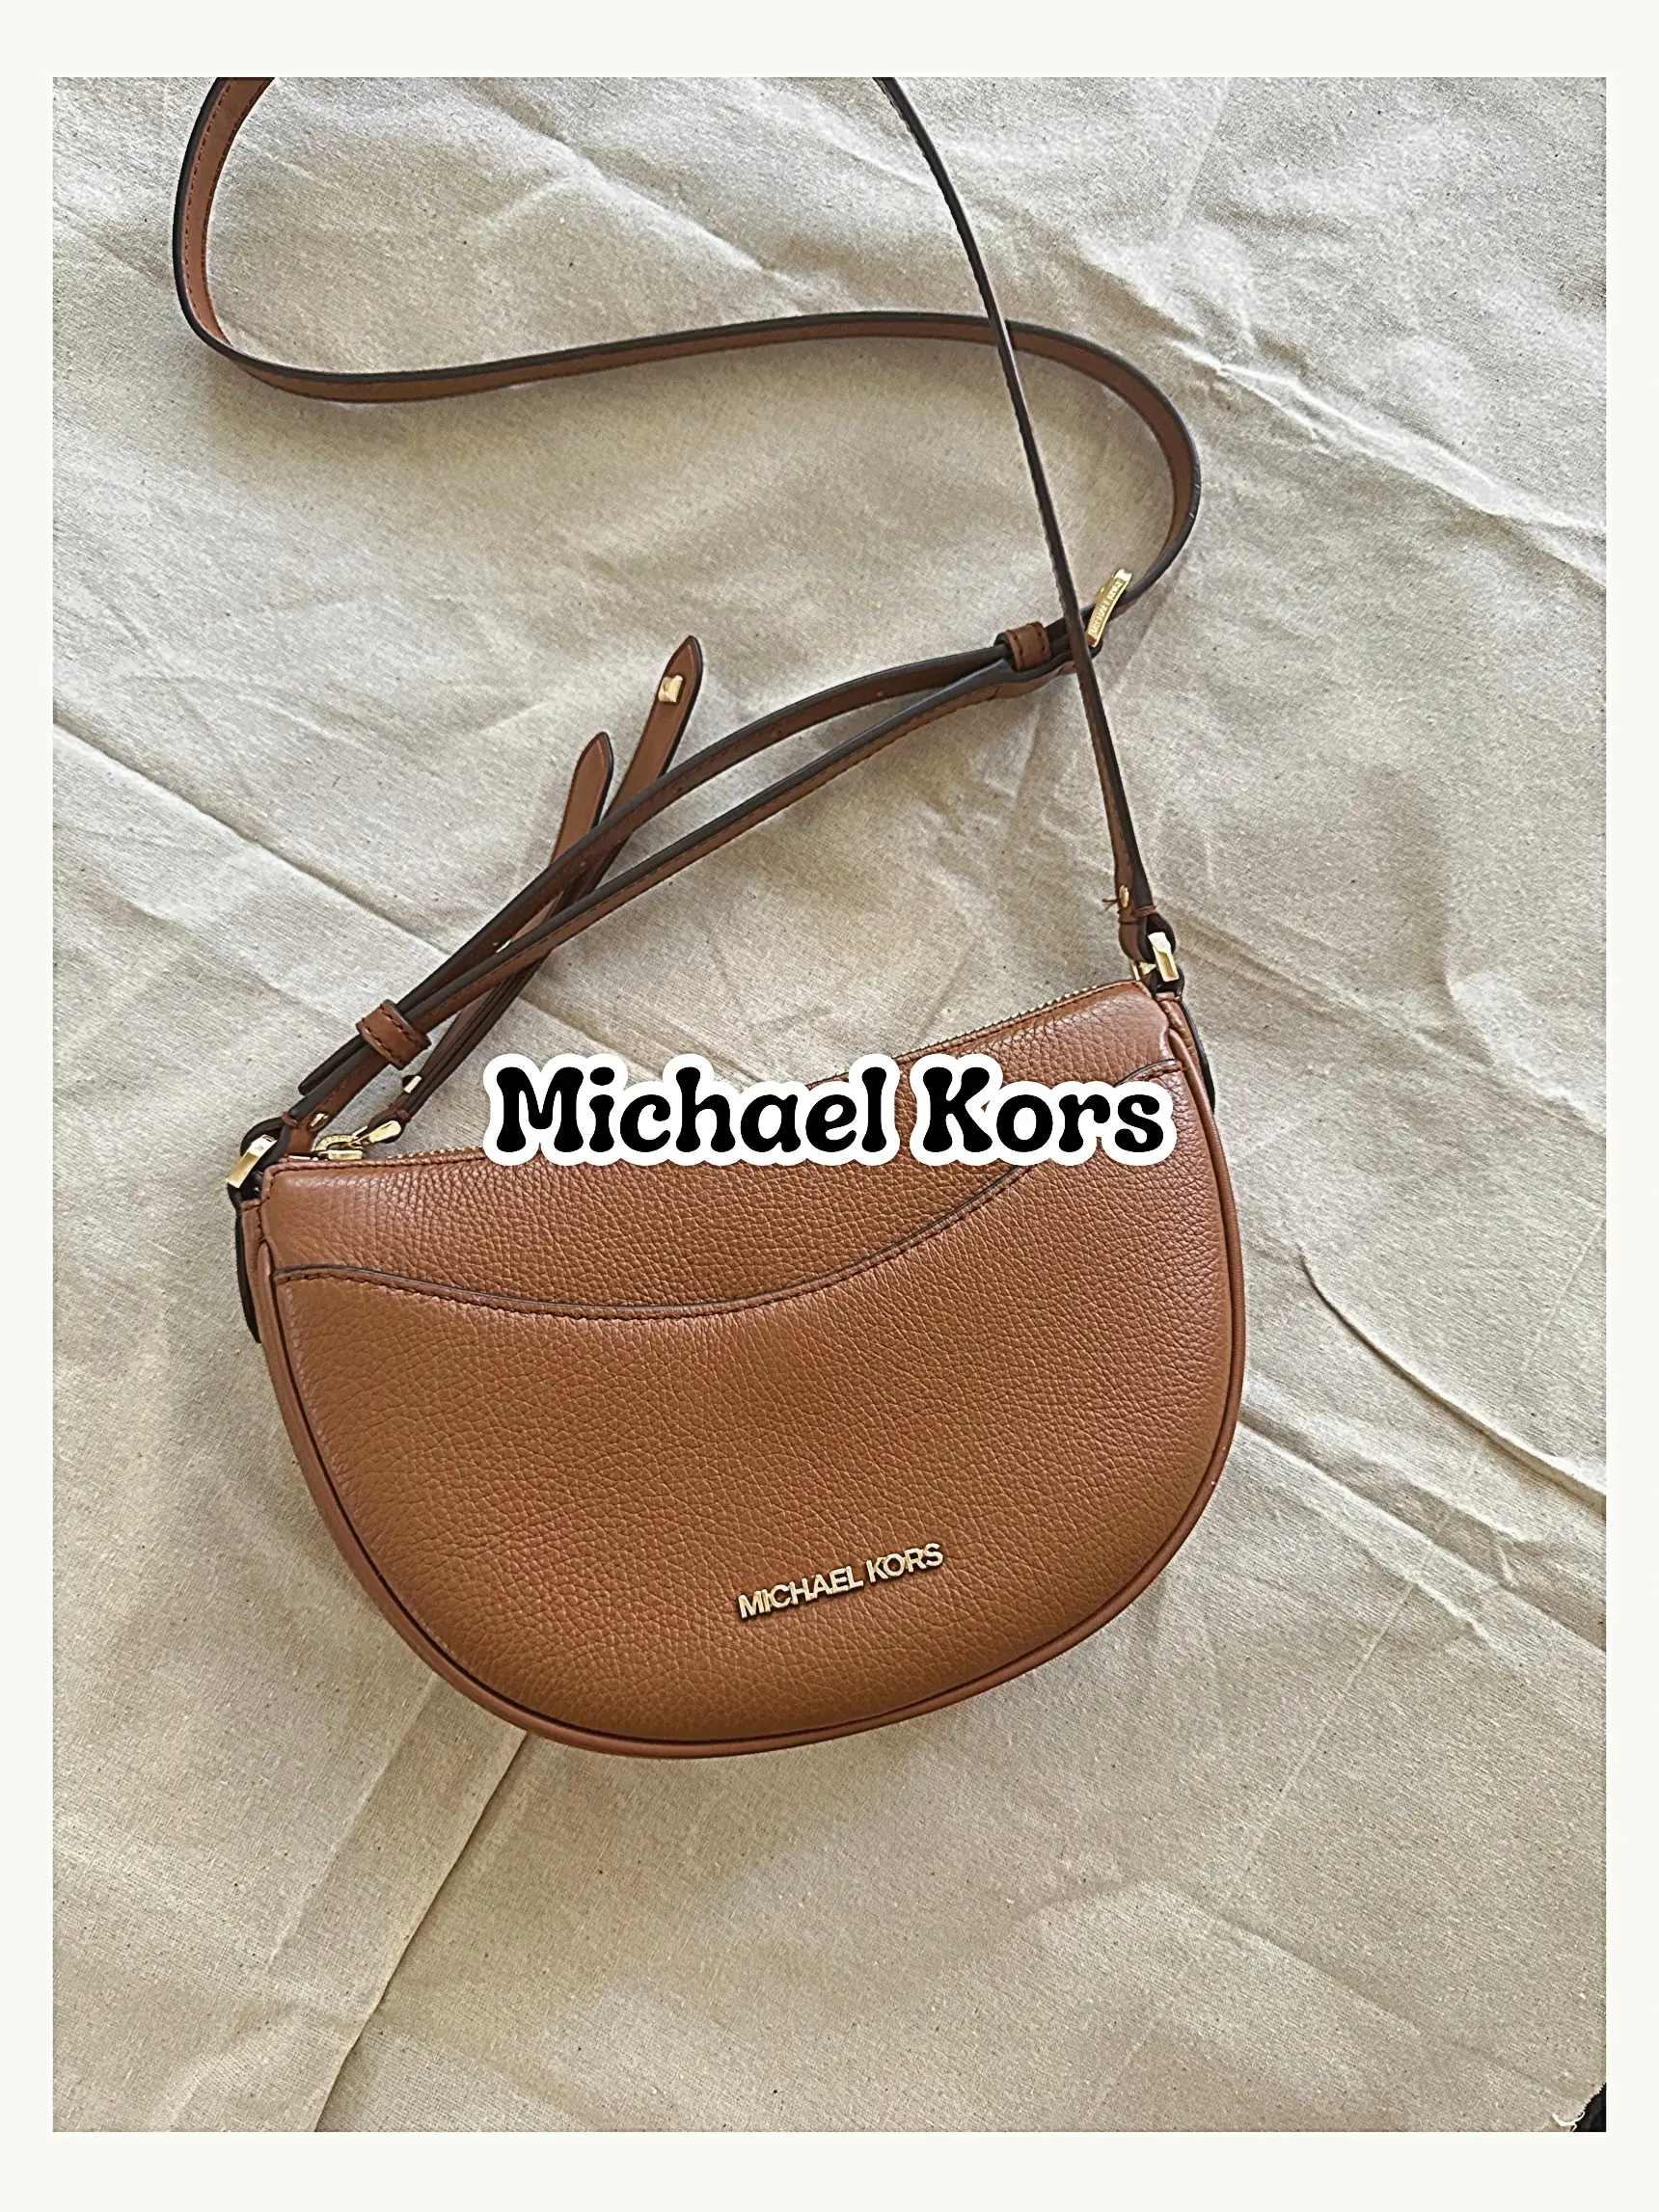 Kendall Jenner  Michael kors outlet, Michael kors clutch, Michael kors bag